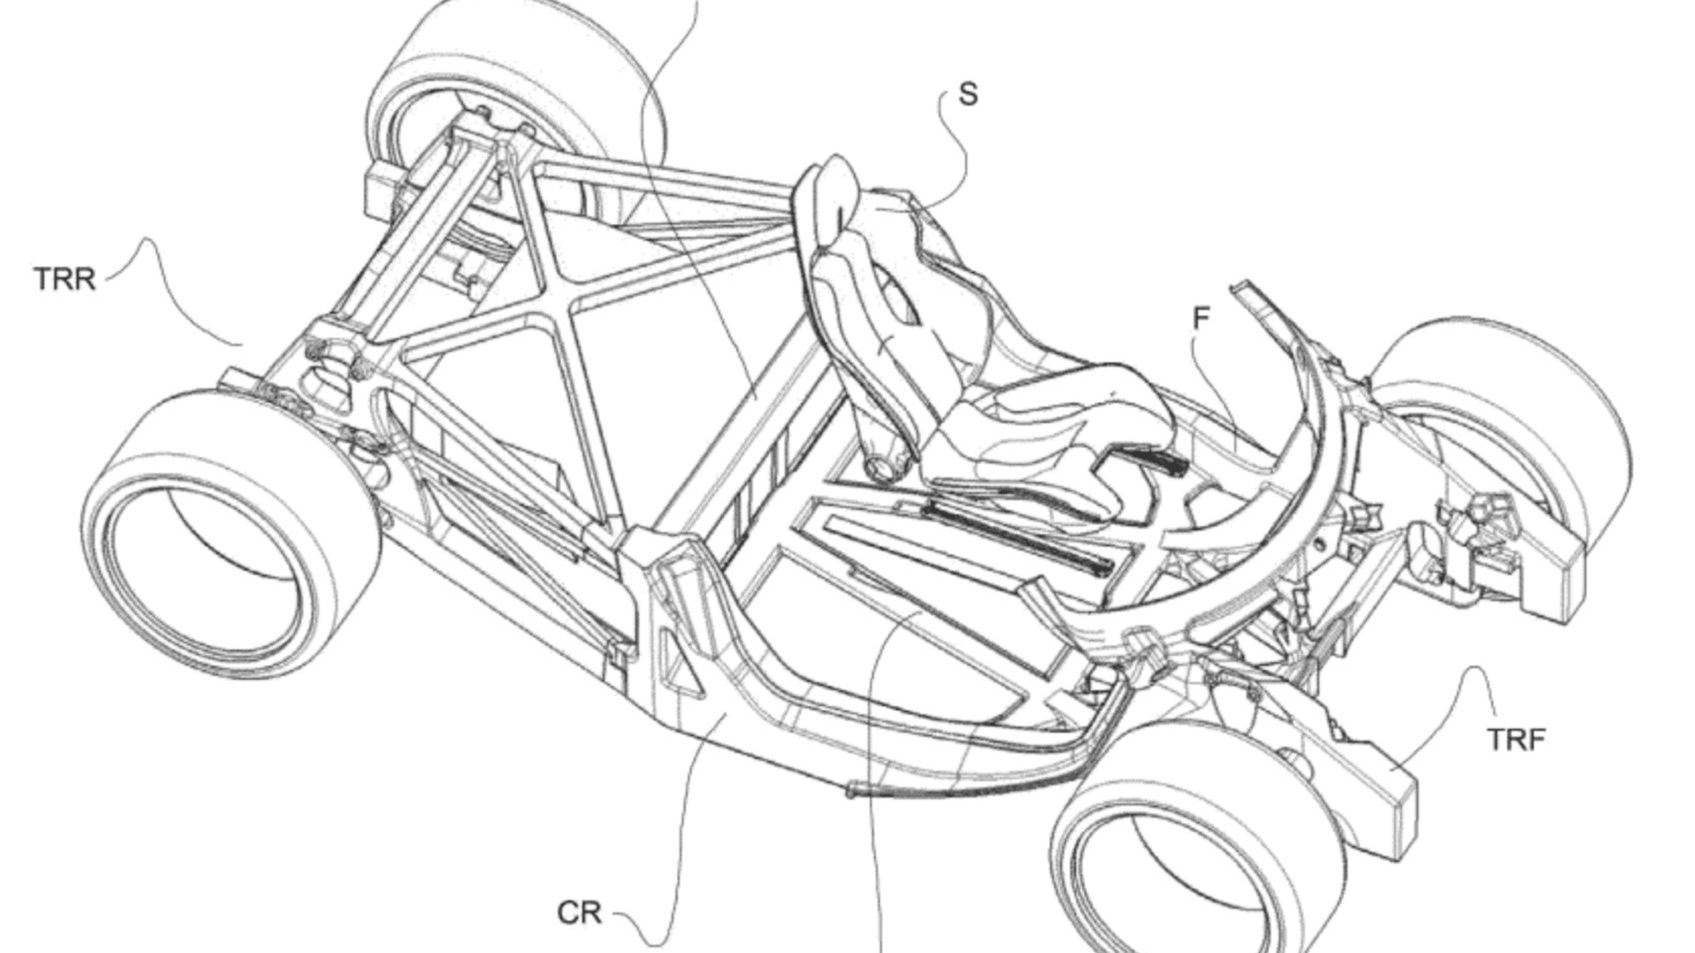 Ferrari electric supercar battery configuration patent image